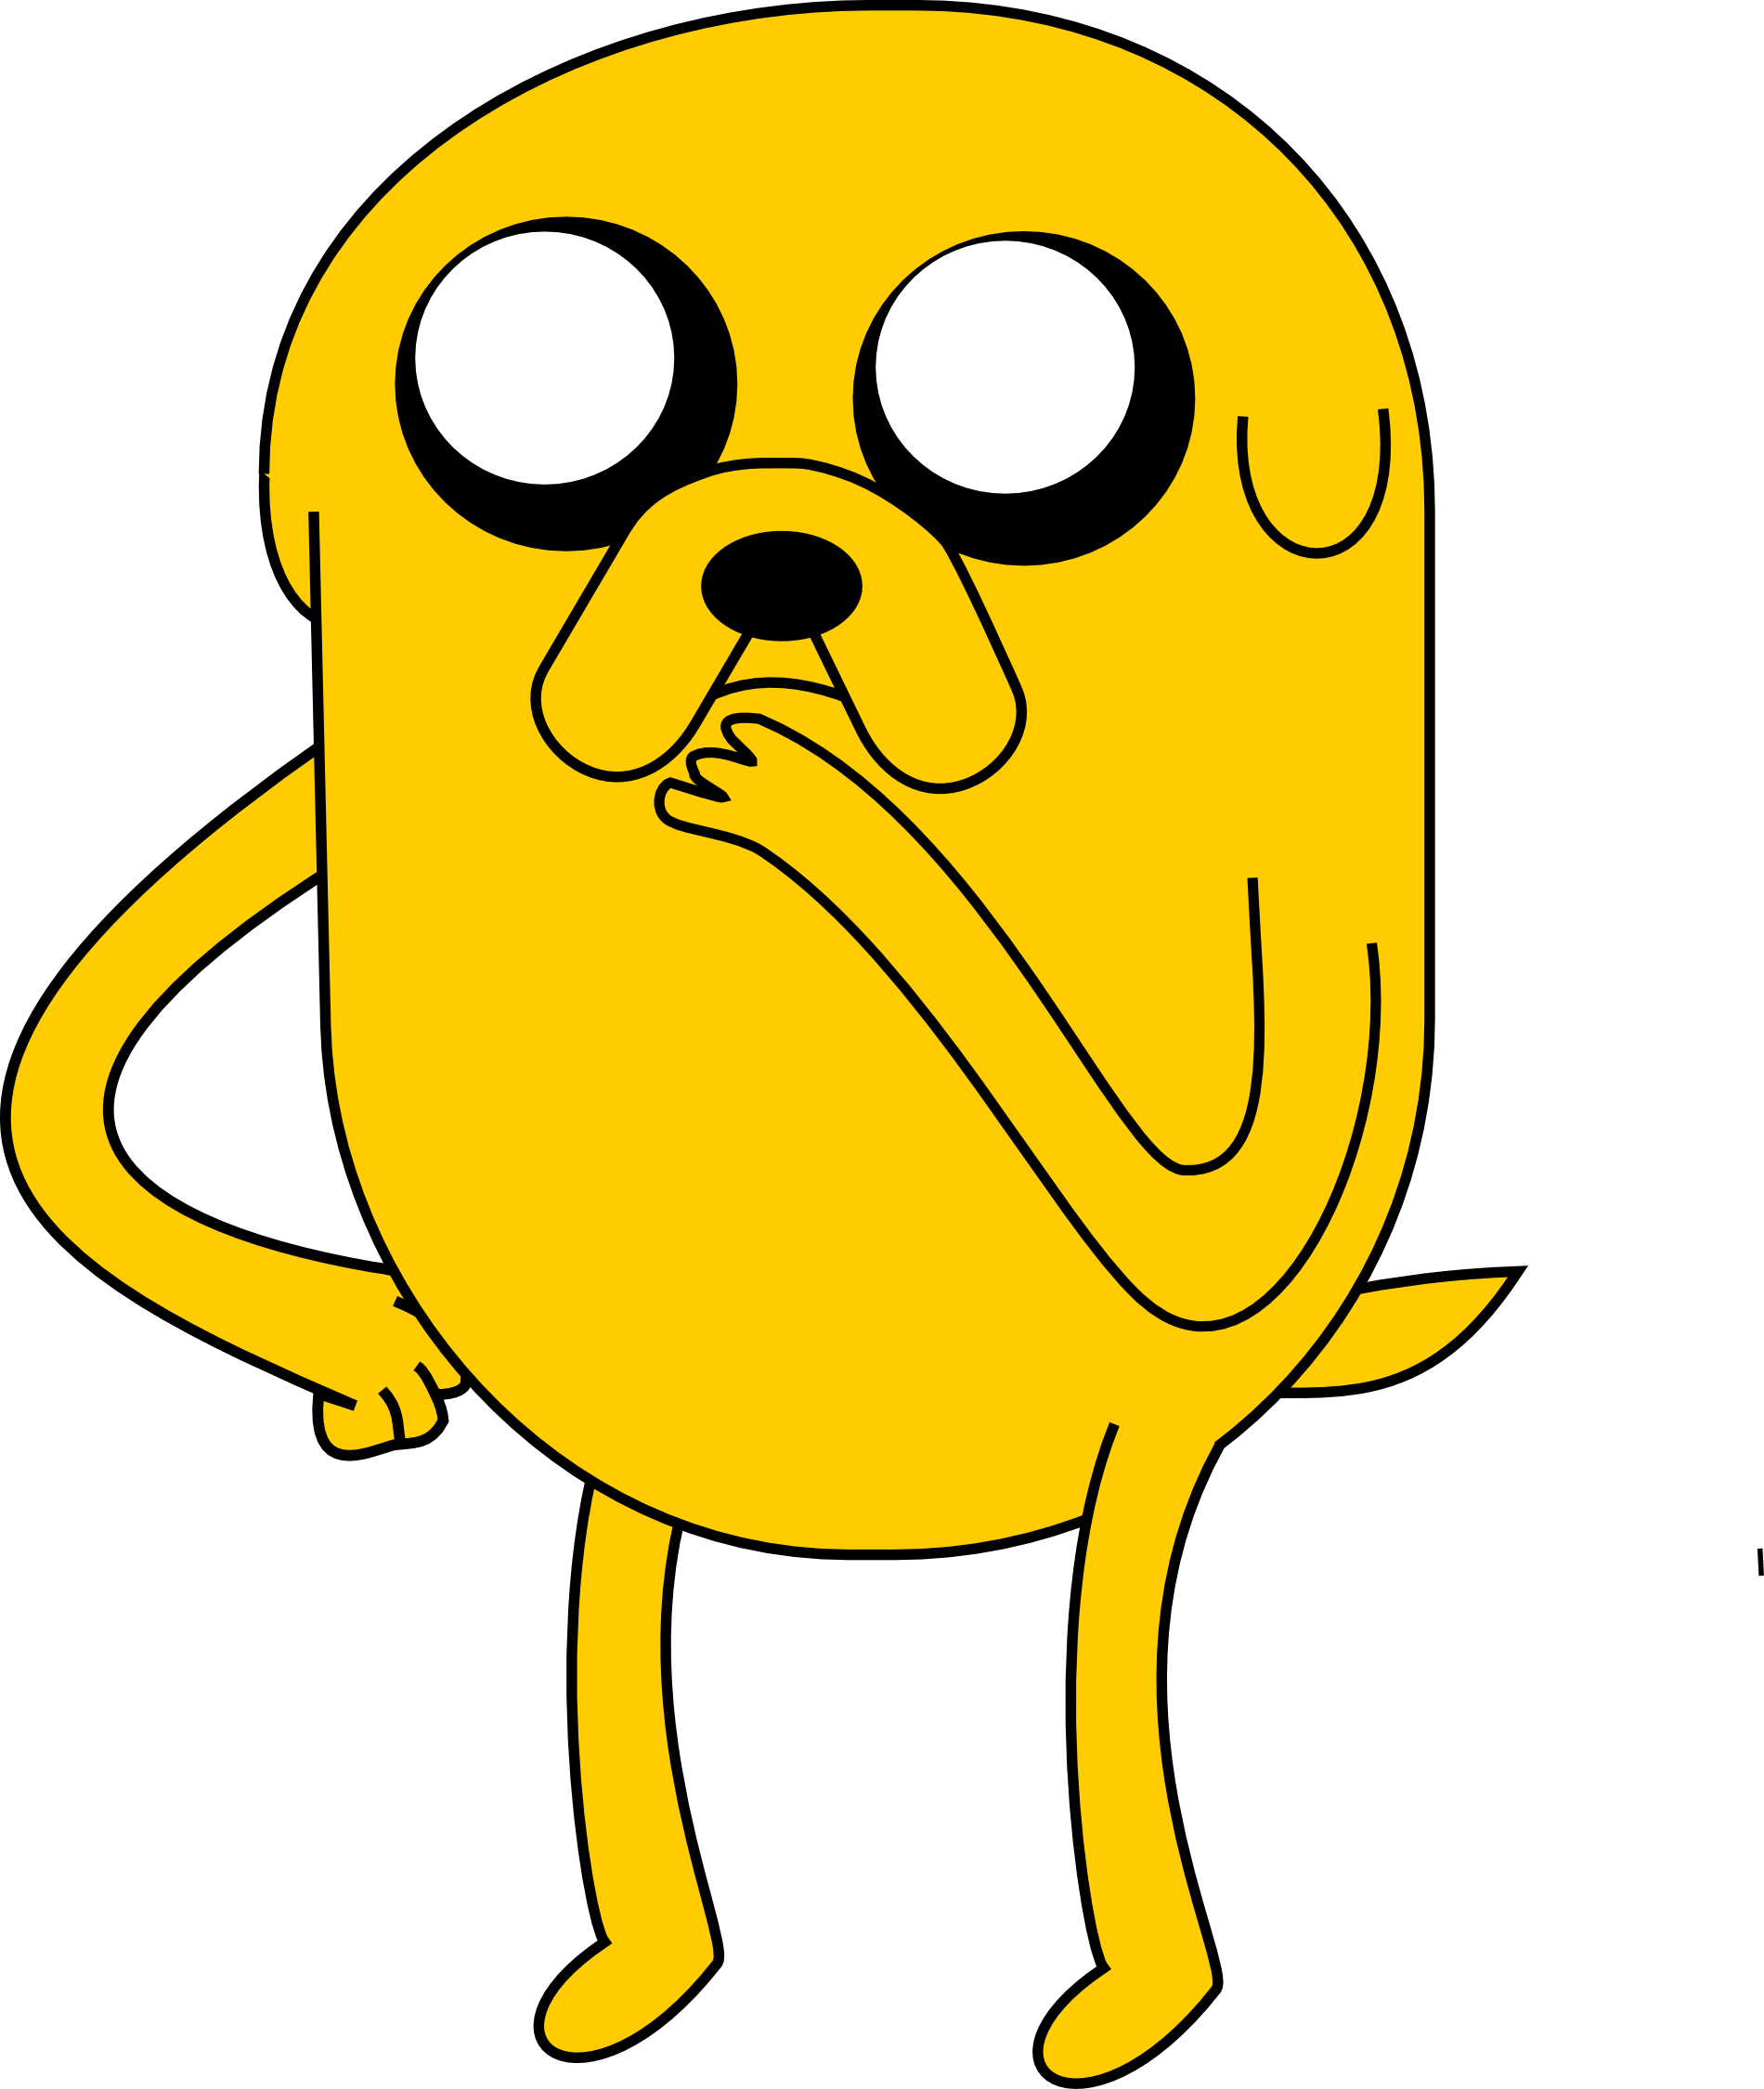 Jake the Dog | Adventure Time | Pinterest